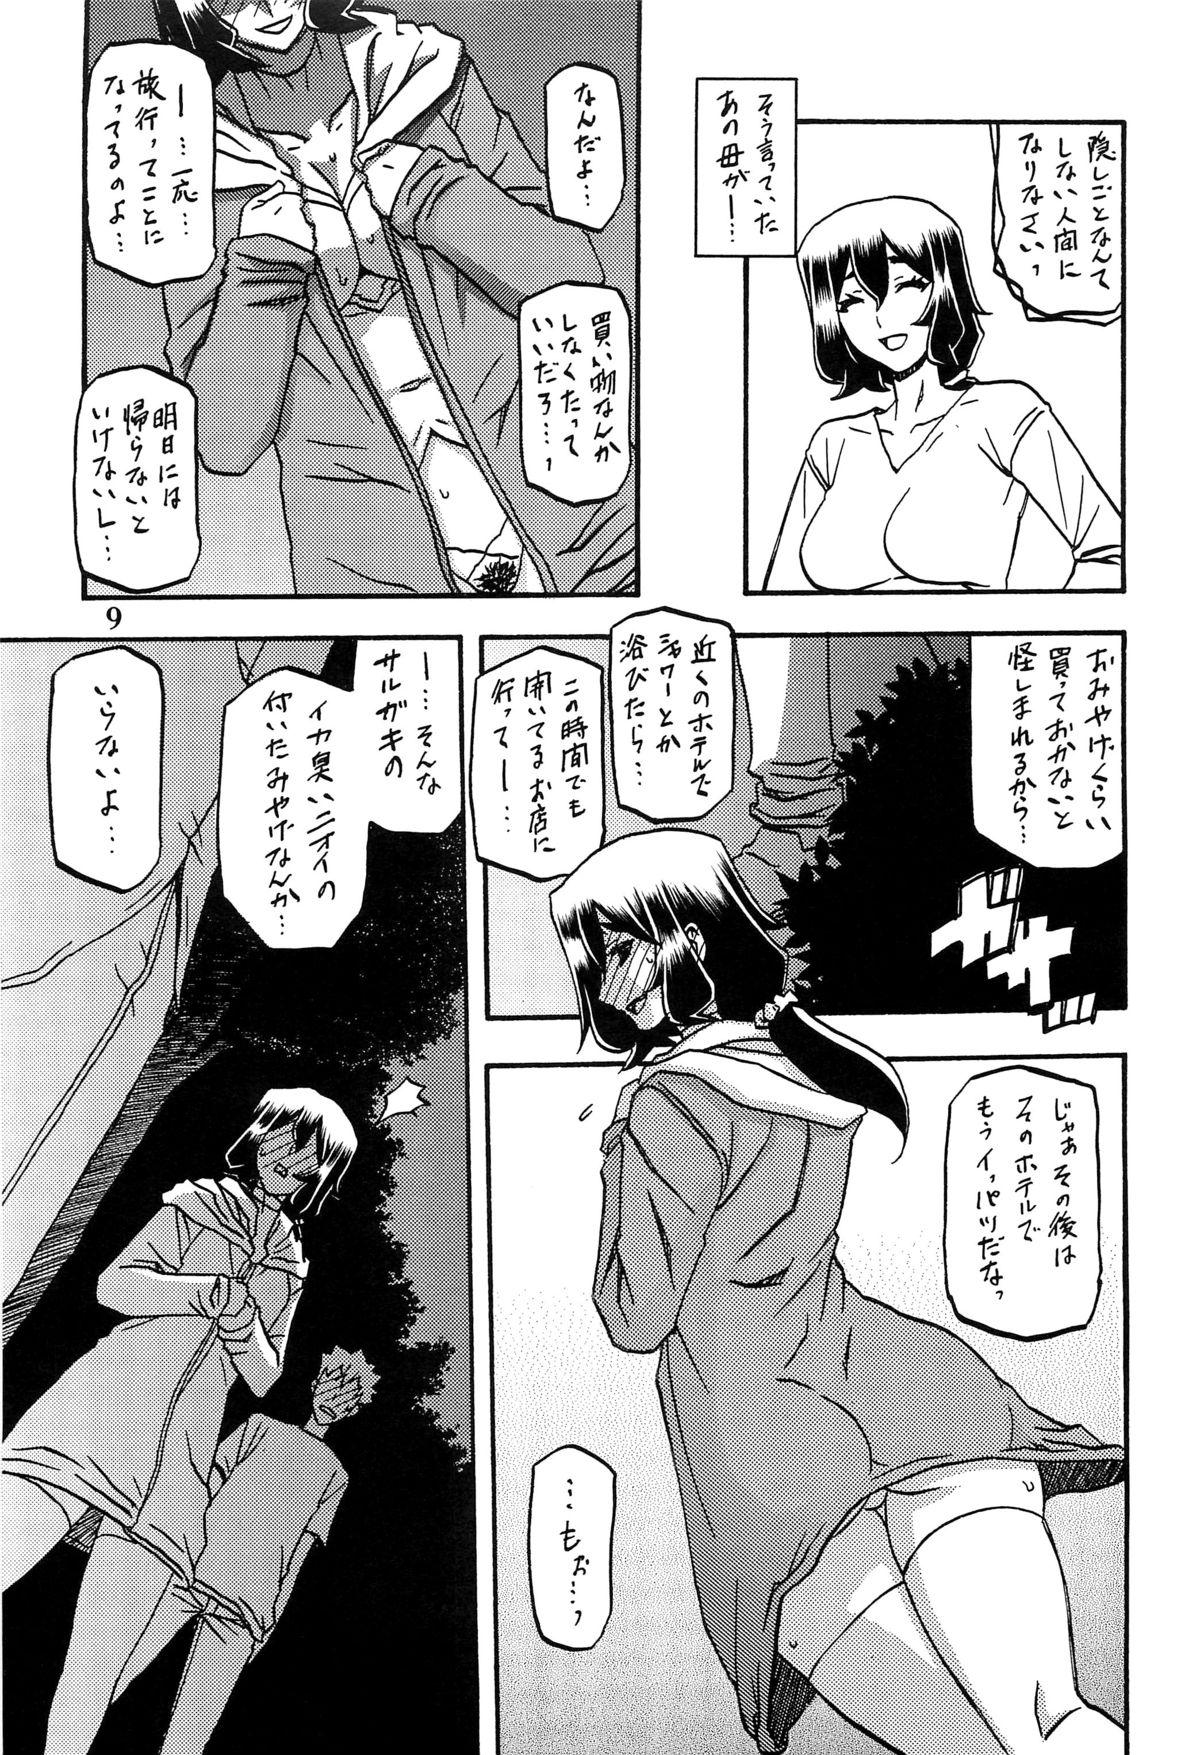 Rubdown Akebi no Mi - Chizuru AFTER Webcam - Page 8